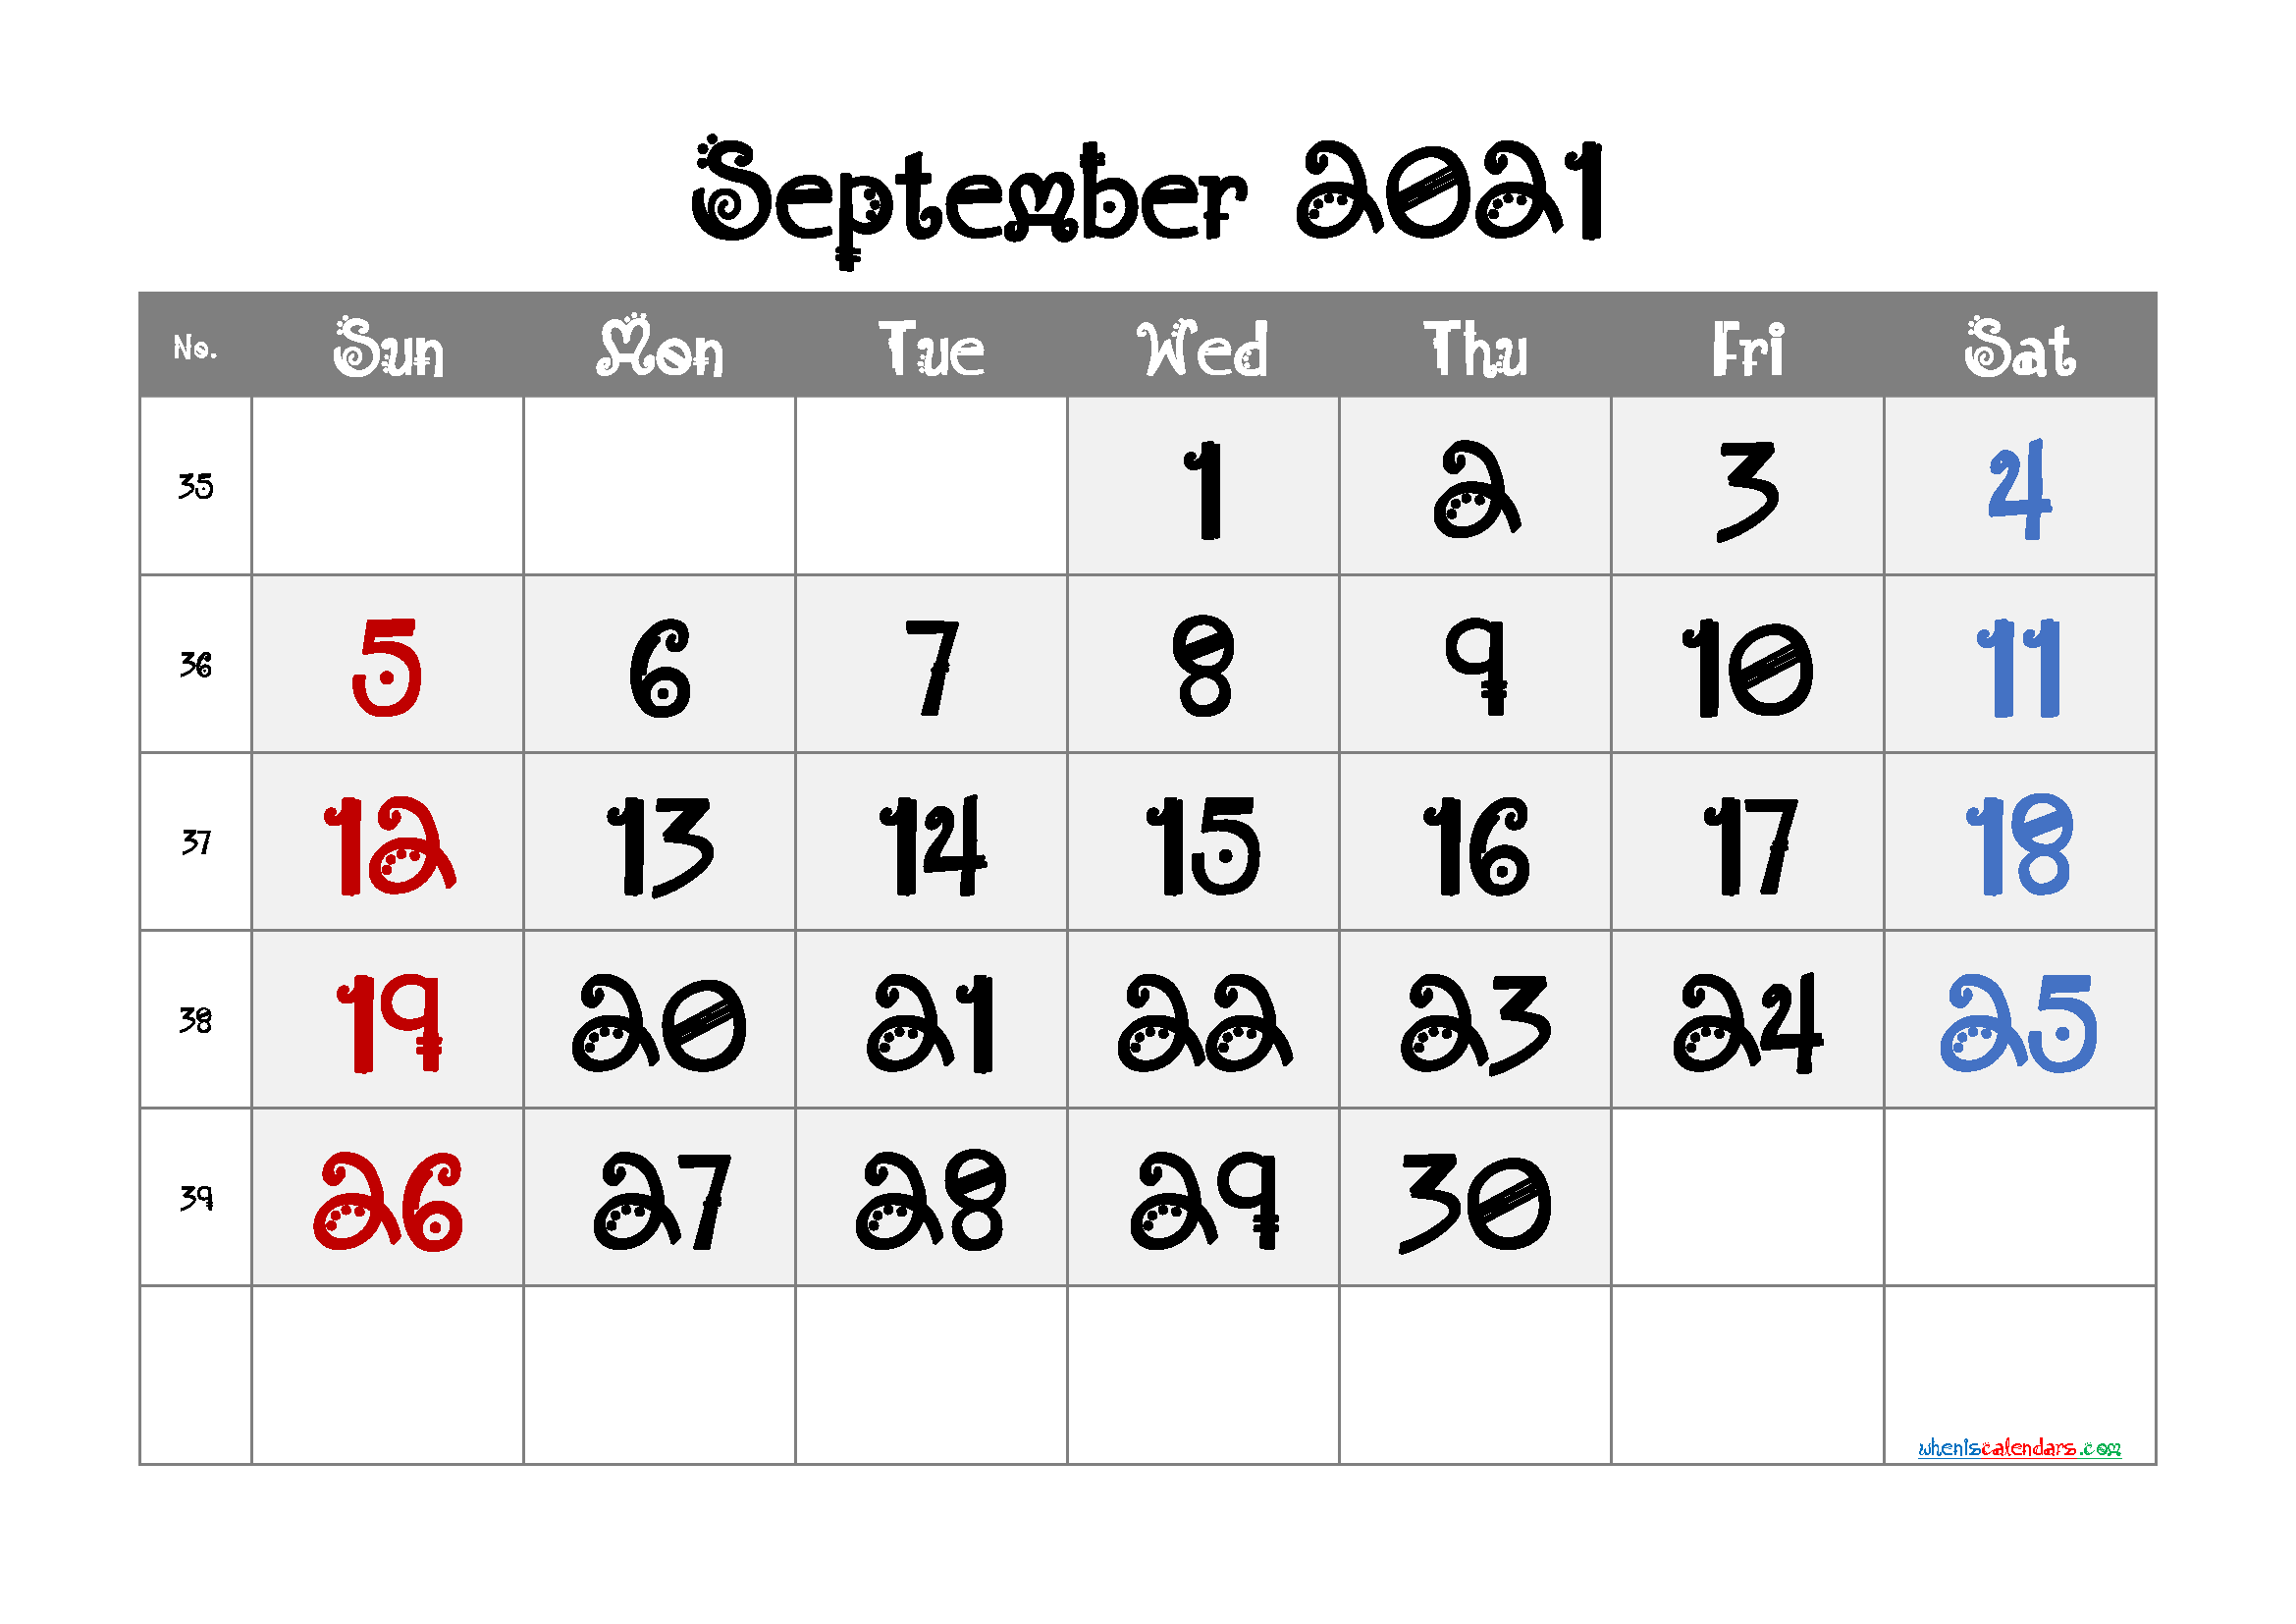 Editable September 2021 Calendar